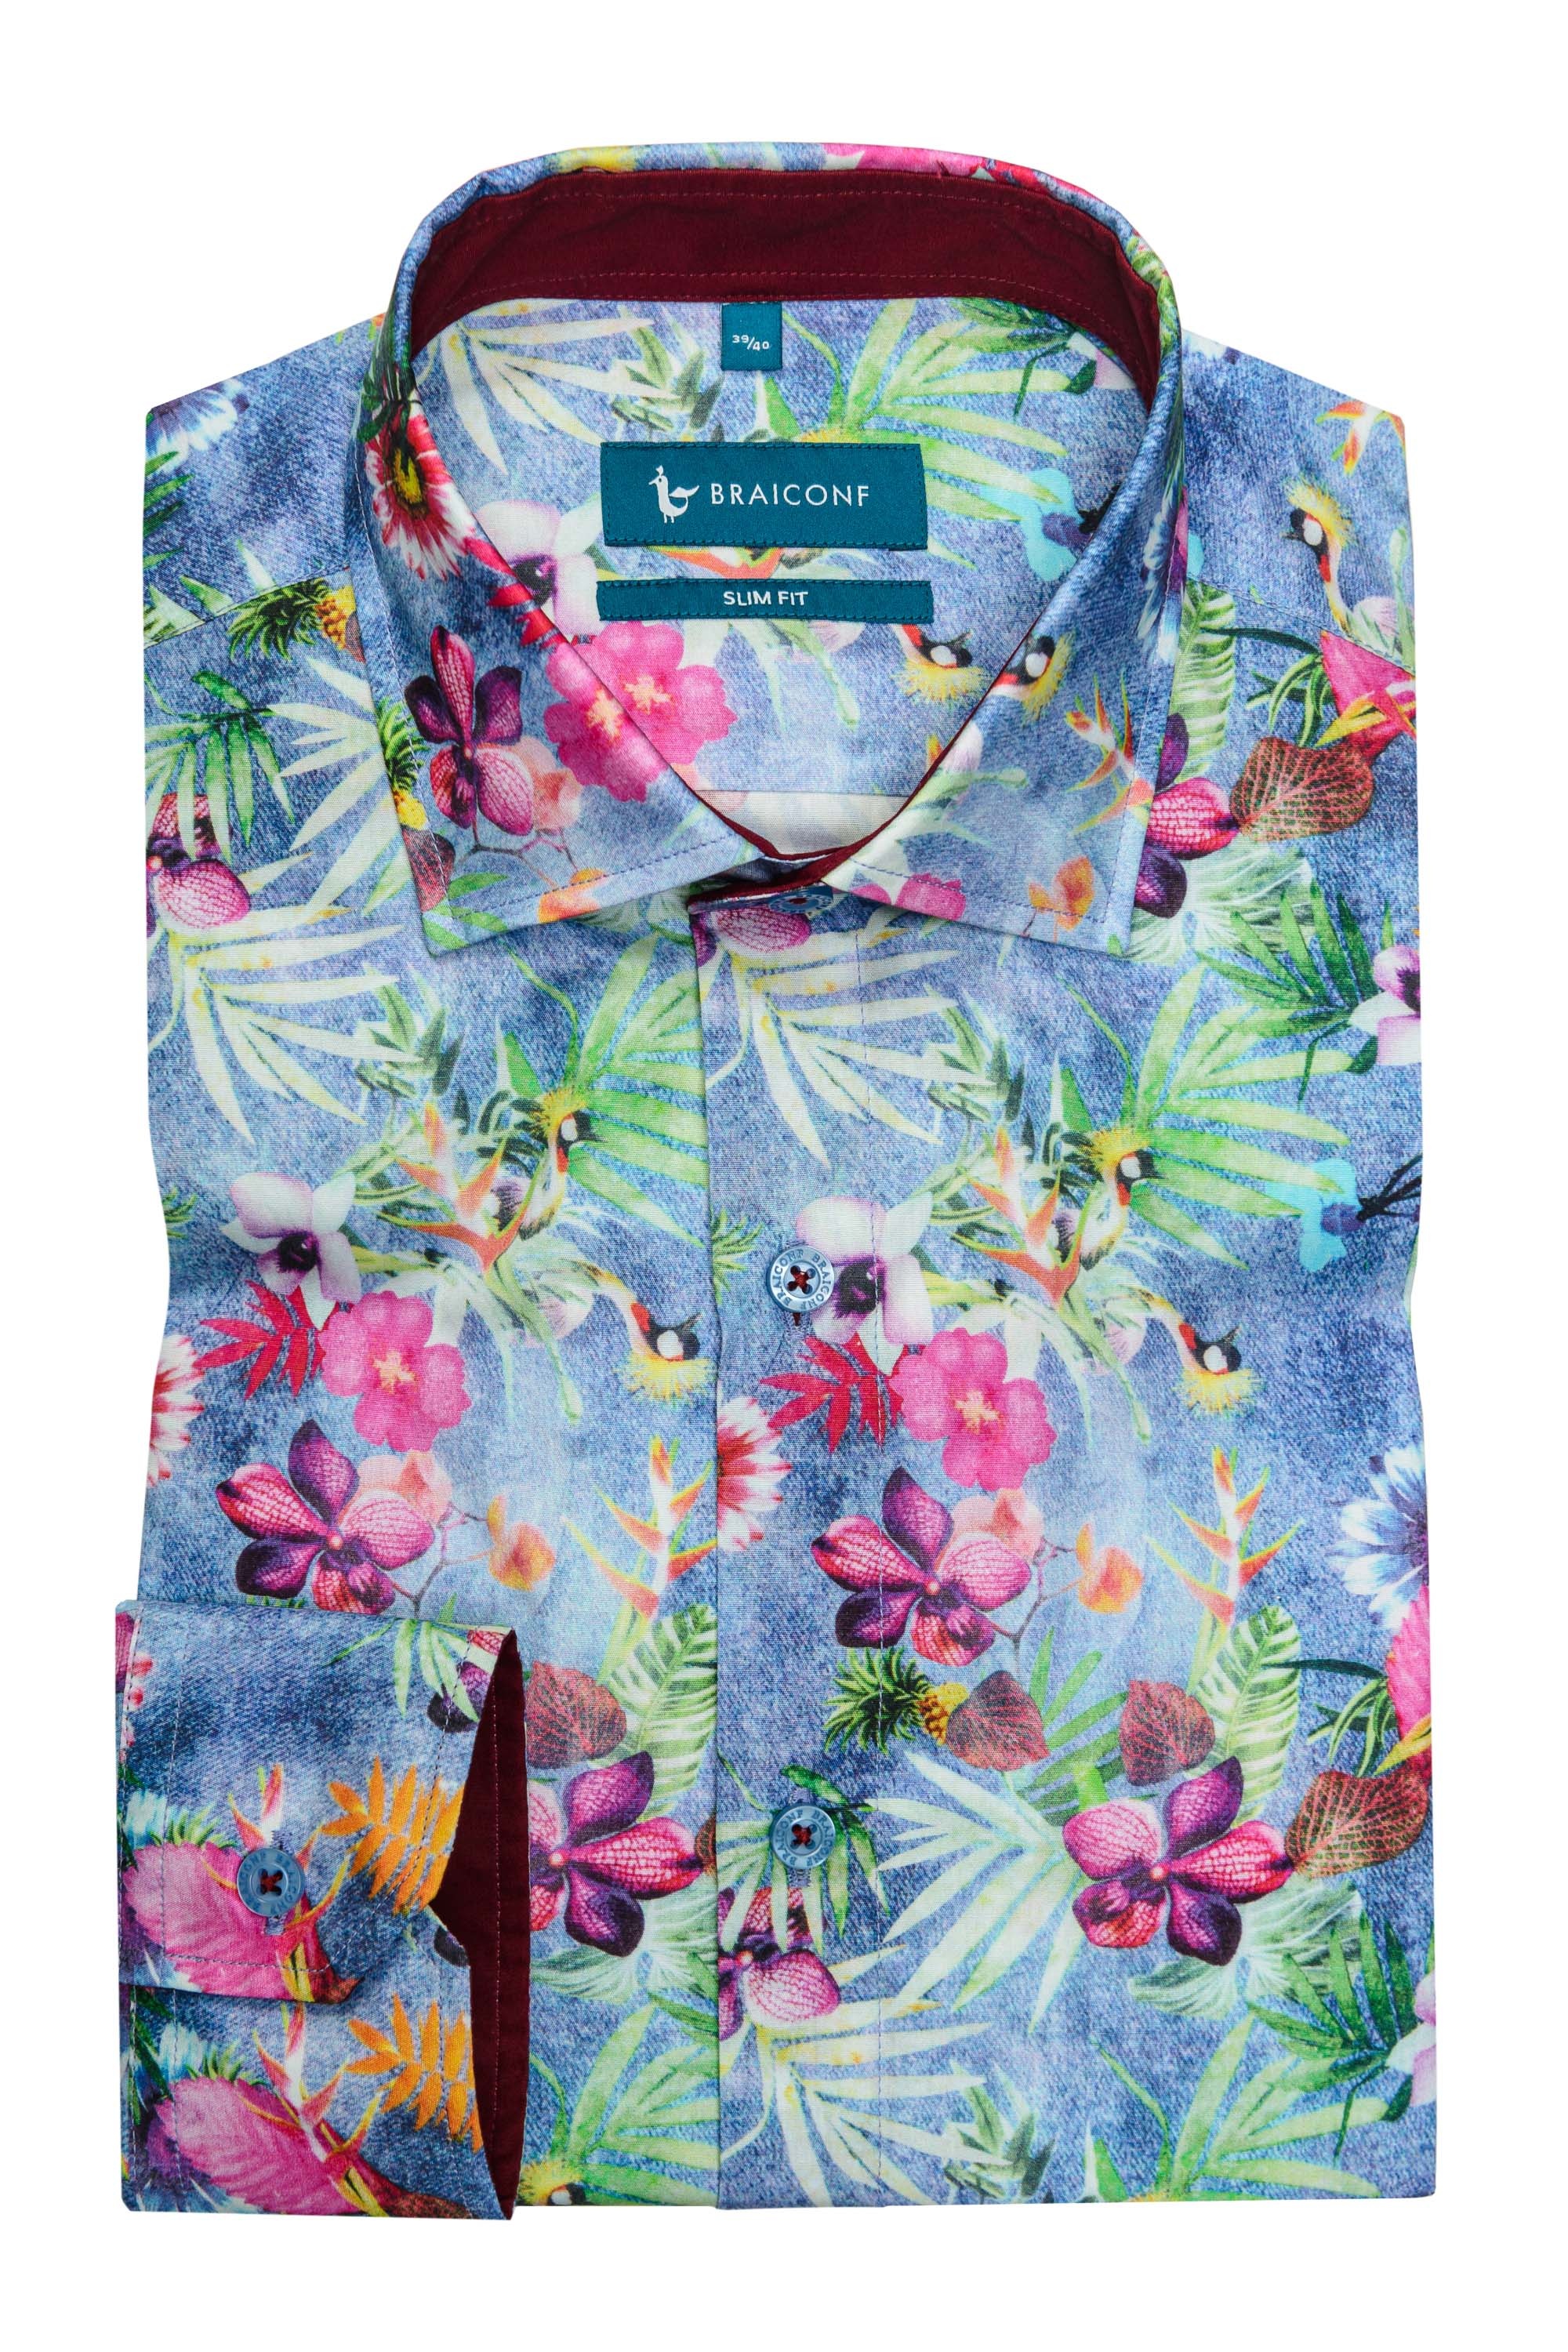 phenomenon Southwest London Camasa casual croita cu tipar cambrat, din tesatura de bumbac cu printuri  multicolore | Braiconf